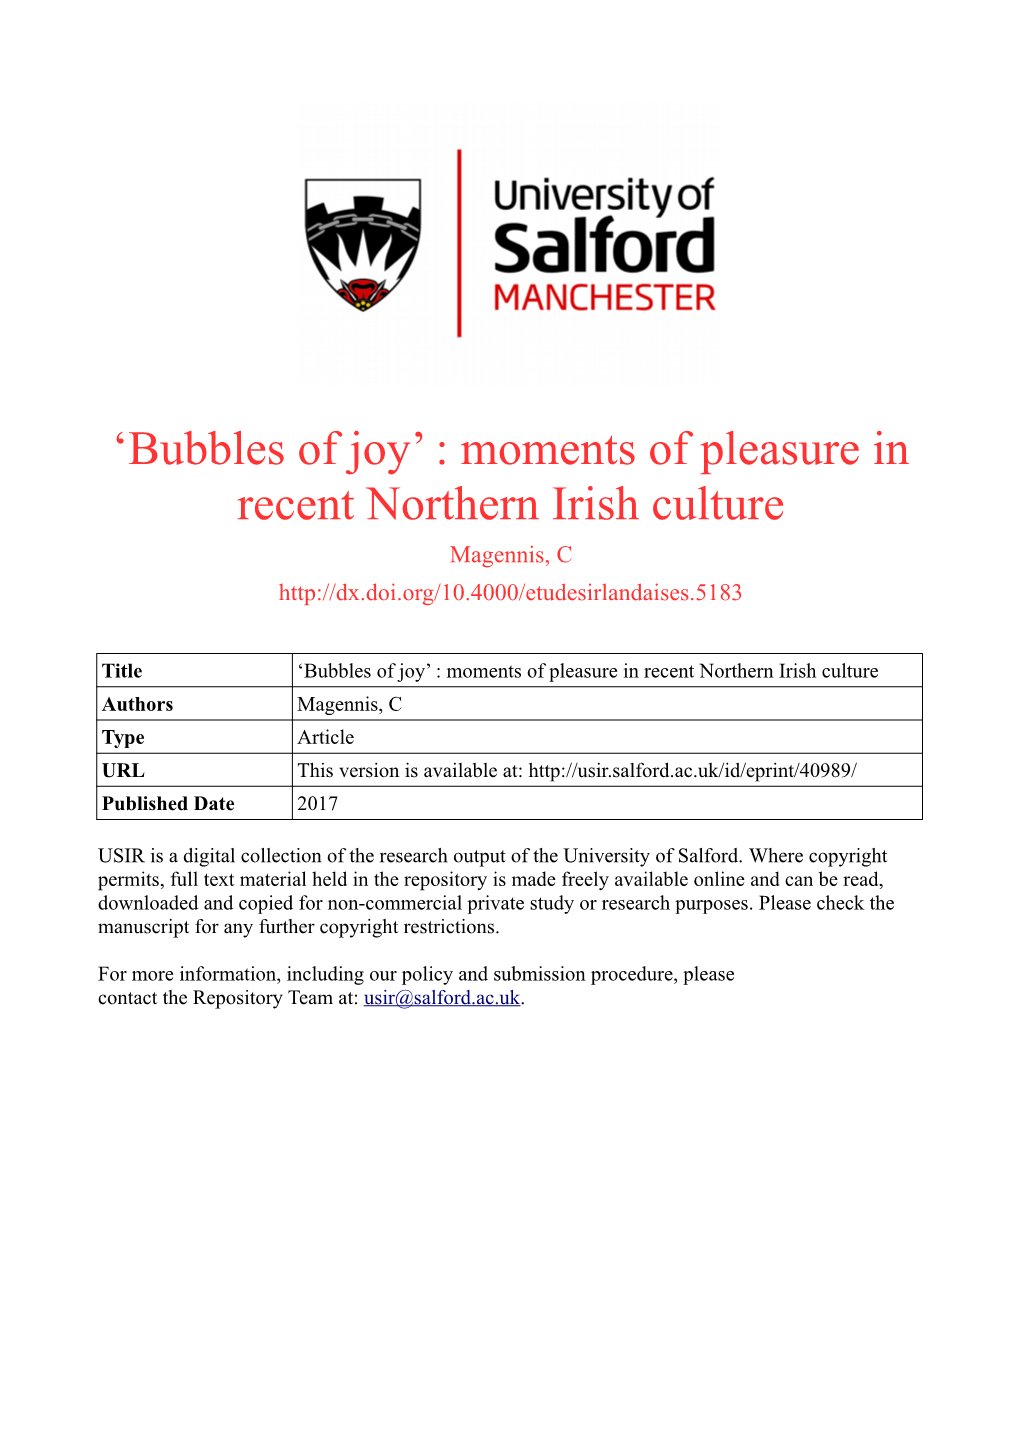 “Bubbles of Joy”: Moments of Pleasure in Recent Northern Irish Culture